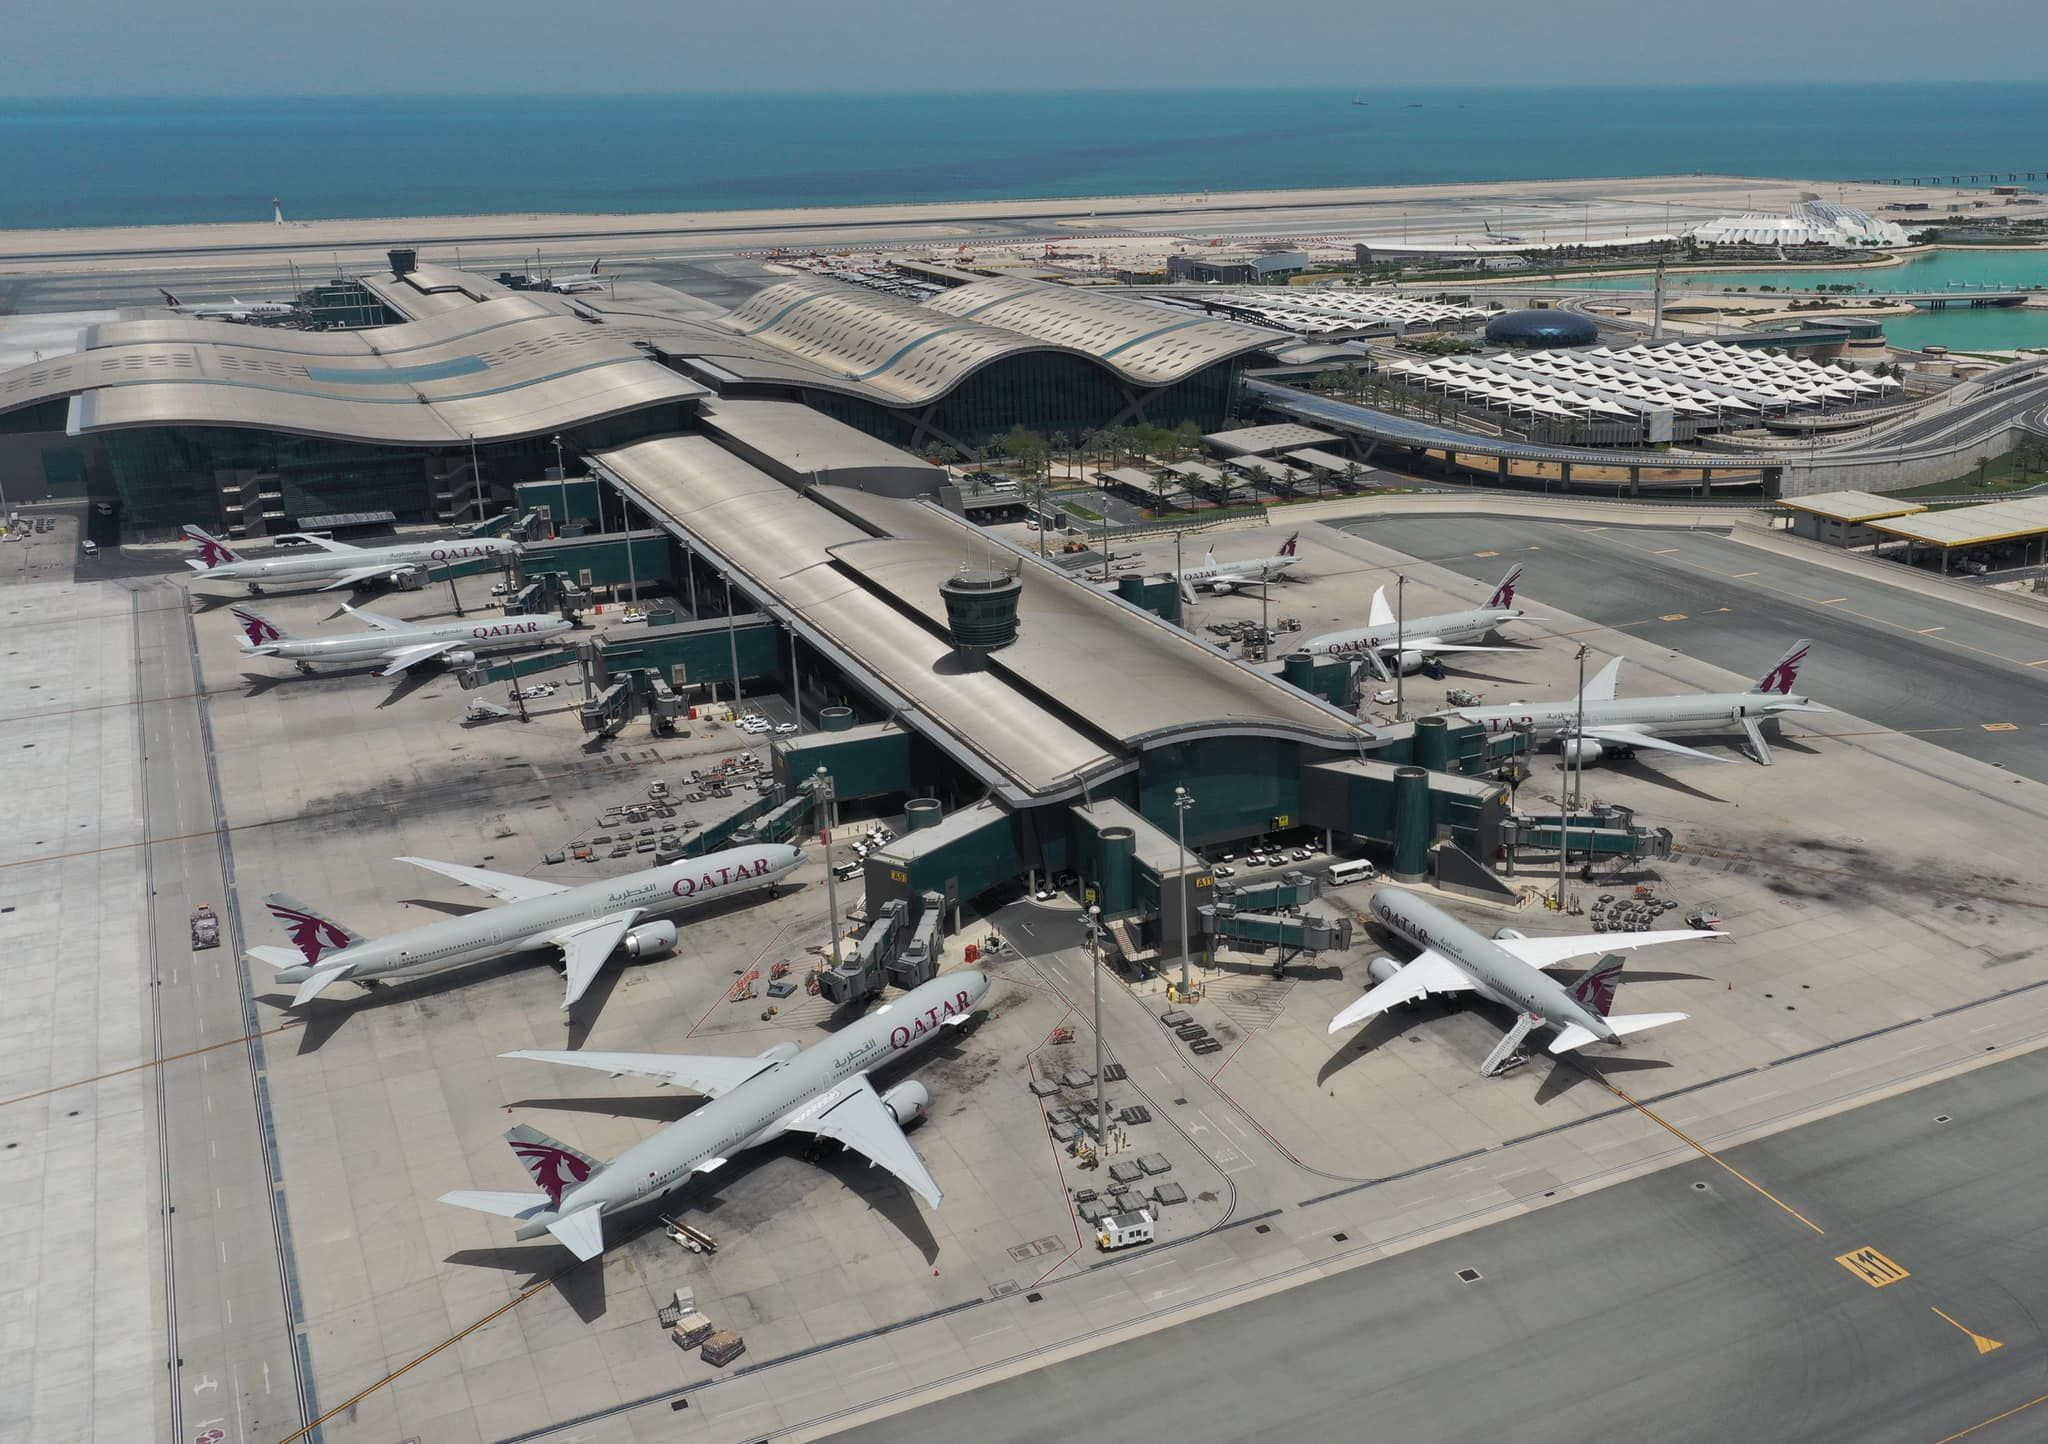 DOH Airport - Hamad International Airport